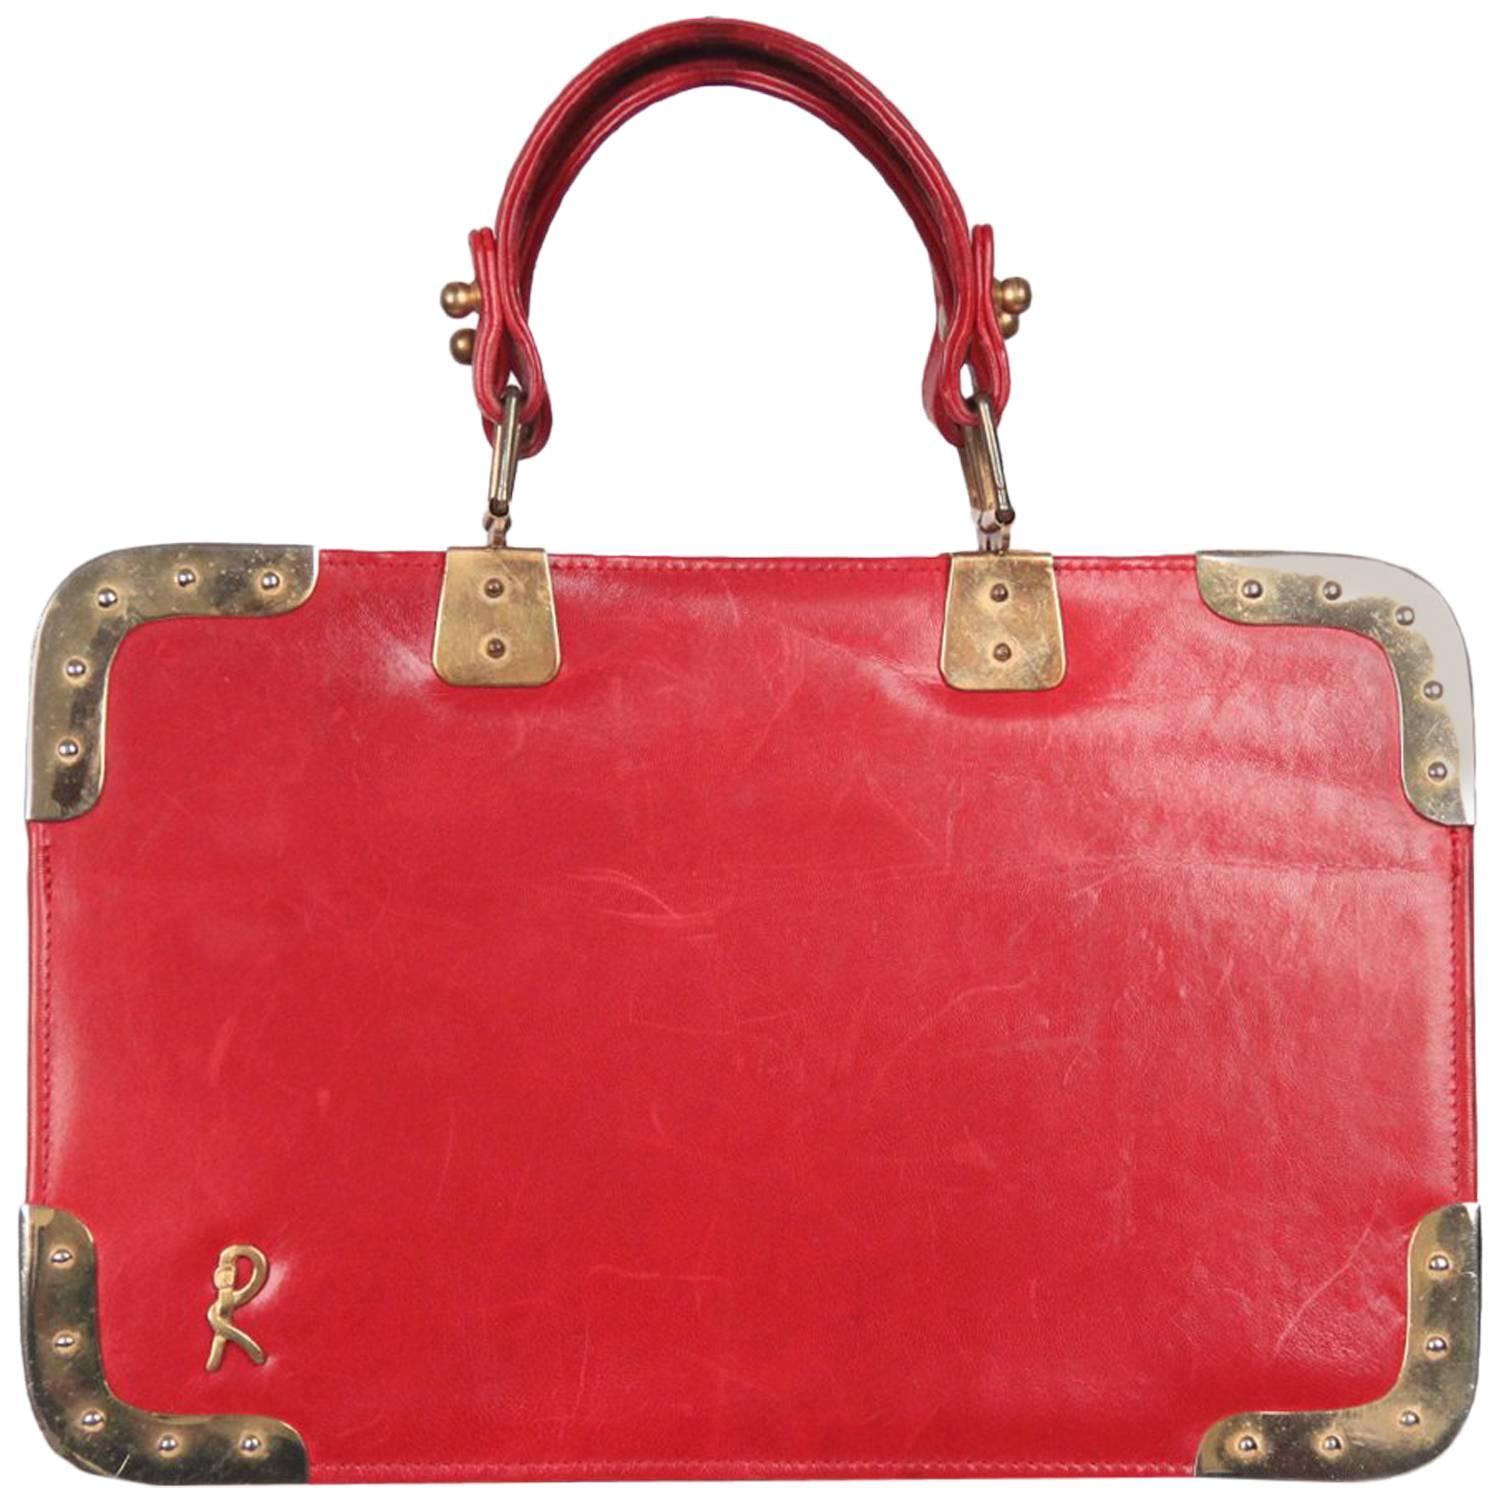 ROBERTA DI CAMERINO VINTAGE Red Leather SATCHEL Handbag